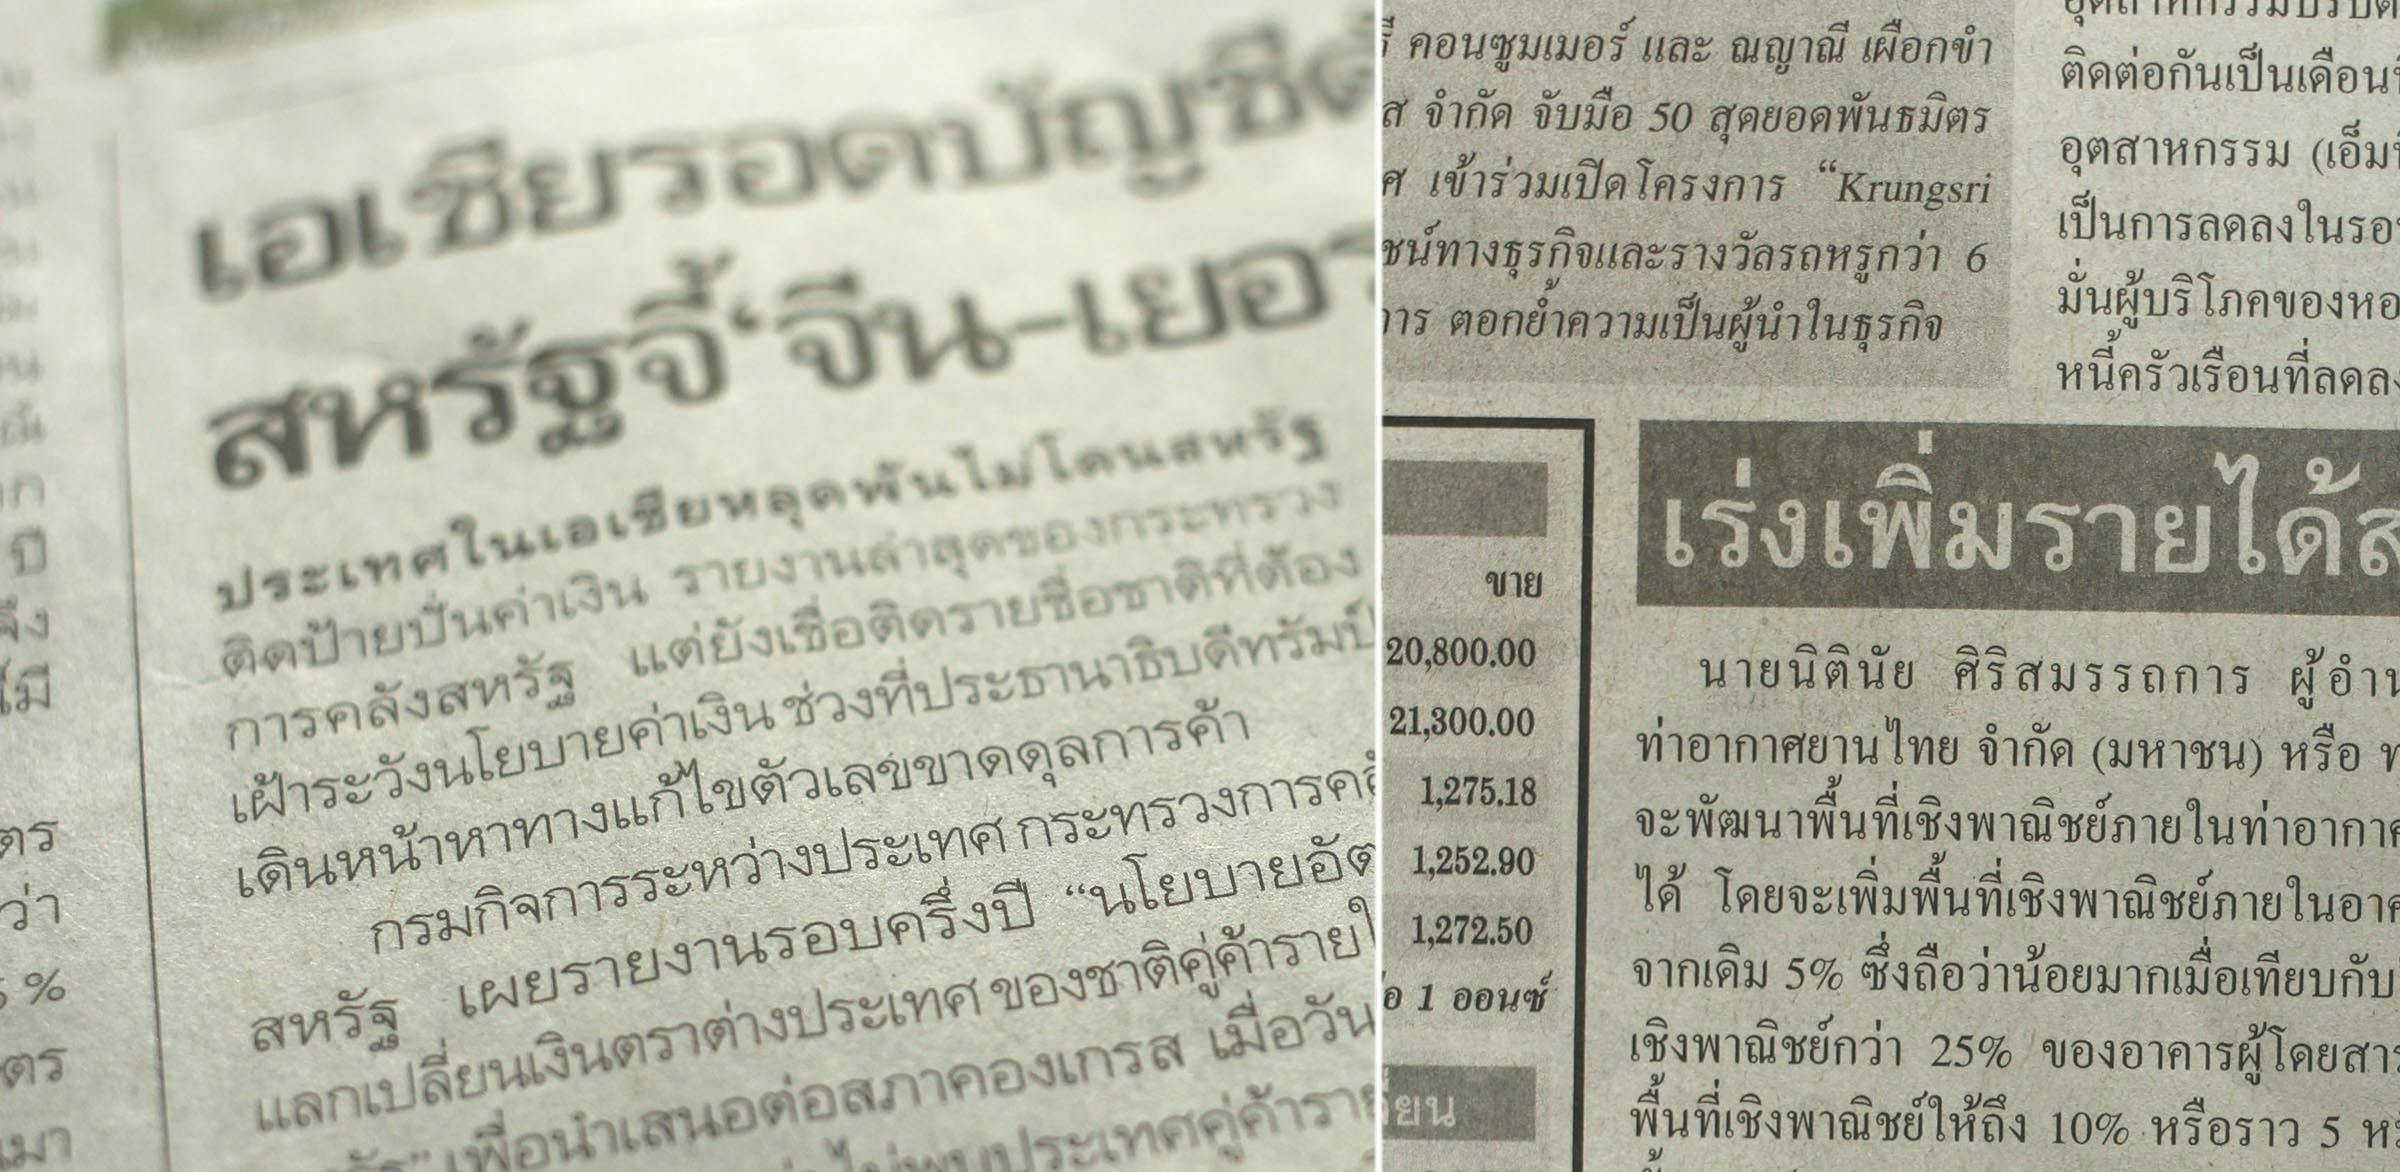 thai newspapers